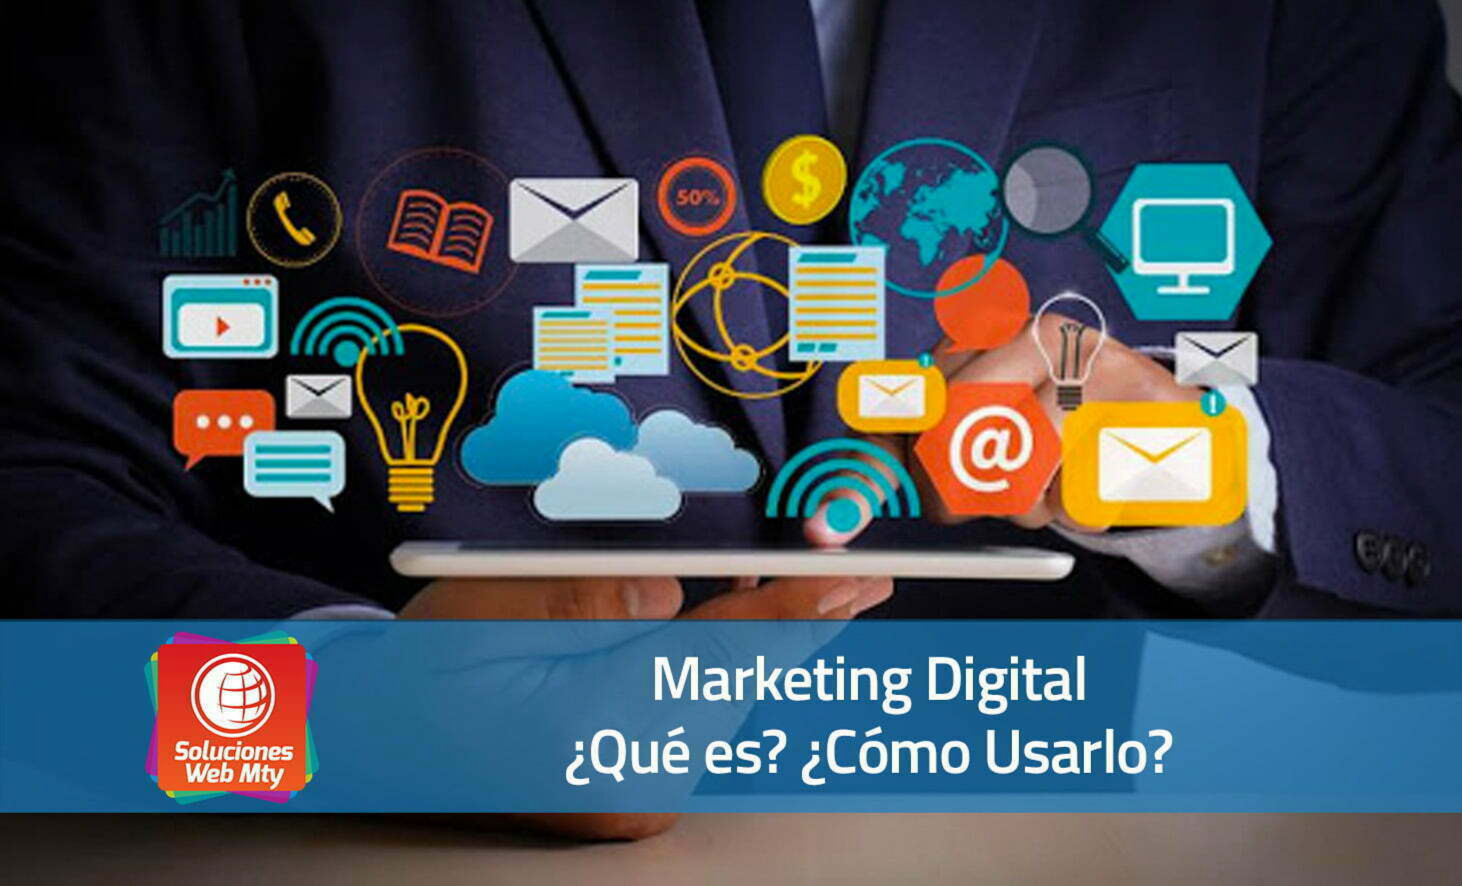 Marketing Digital ¿Qué es? ¿Cómo usarlo?